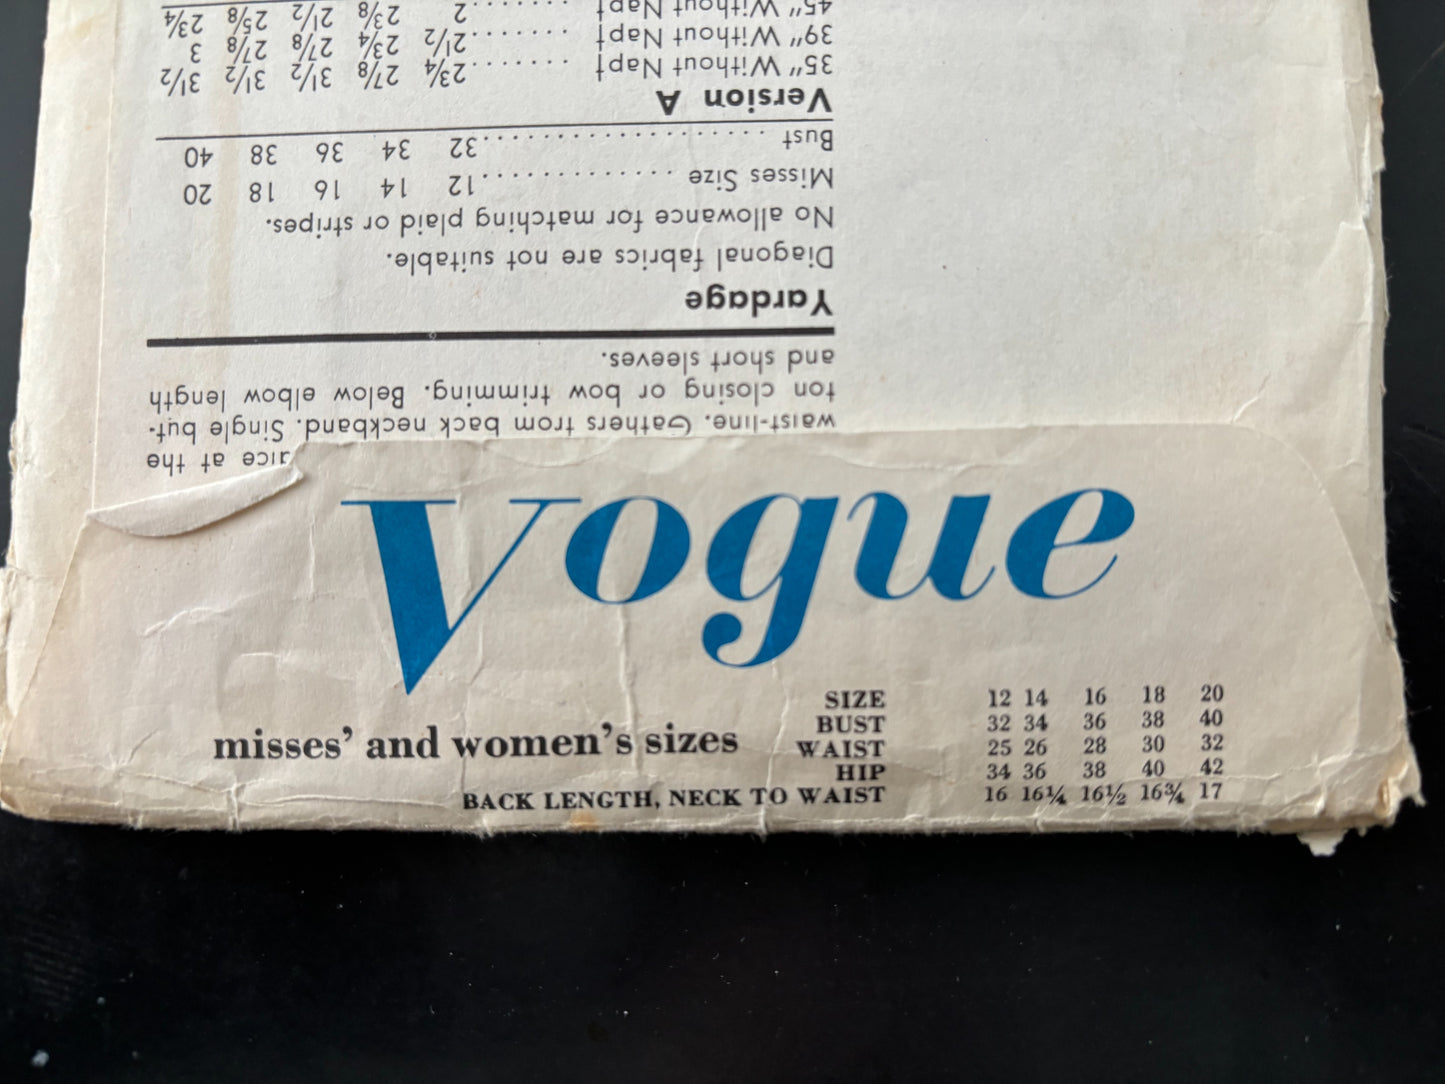 1959 Vogue 9781 One Piece Dress Sewing Pattern - Size 18